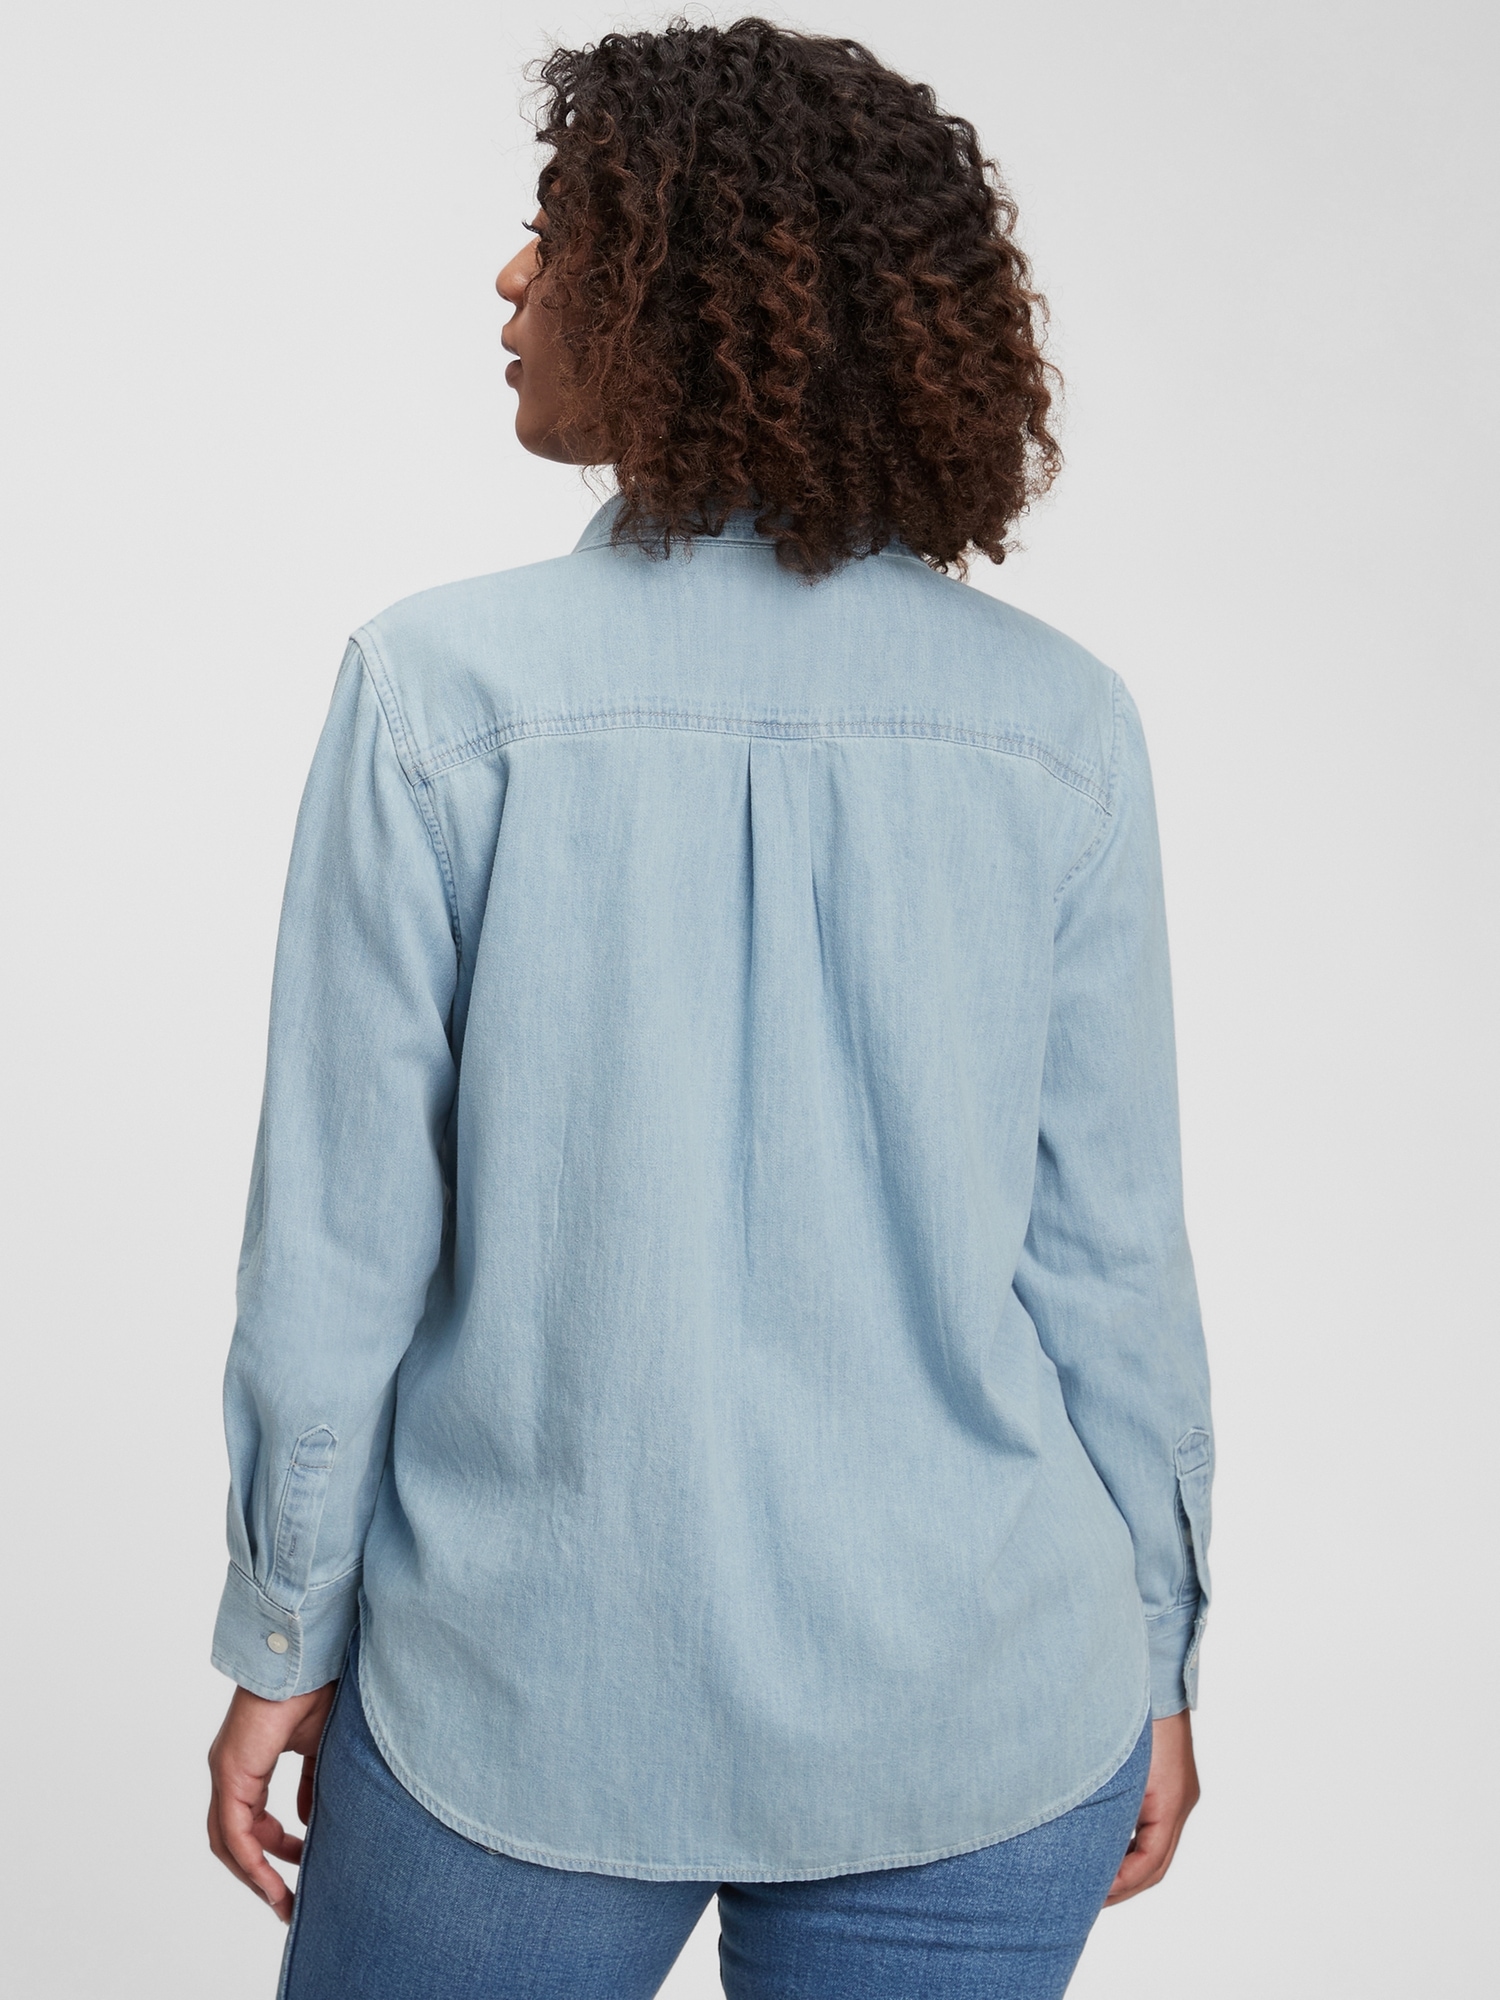 ESPRIT - Denim jacket in a vintage look, in organic cotton at our online  shop